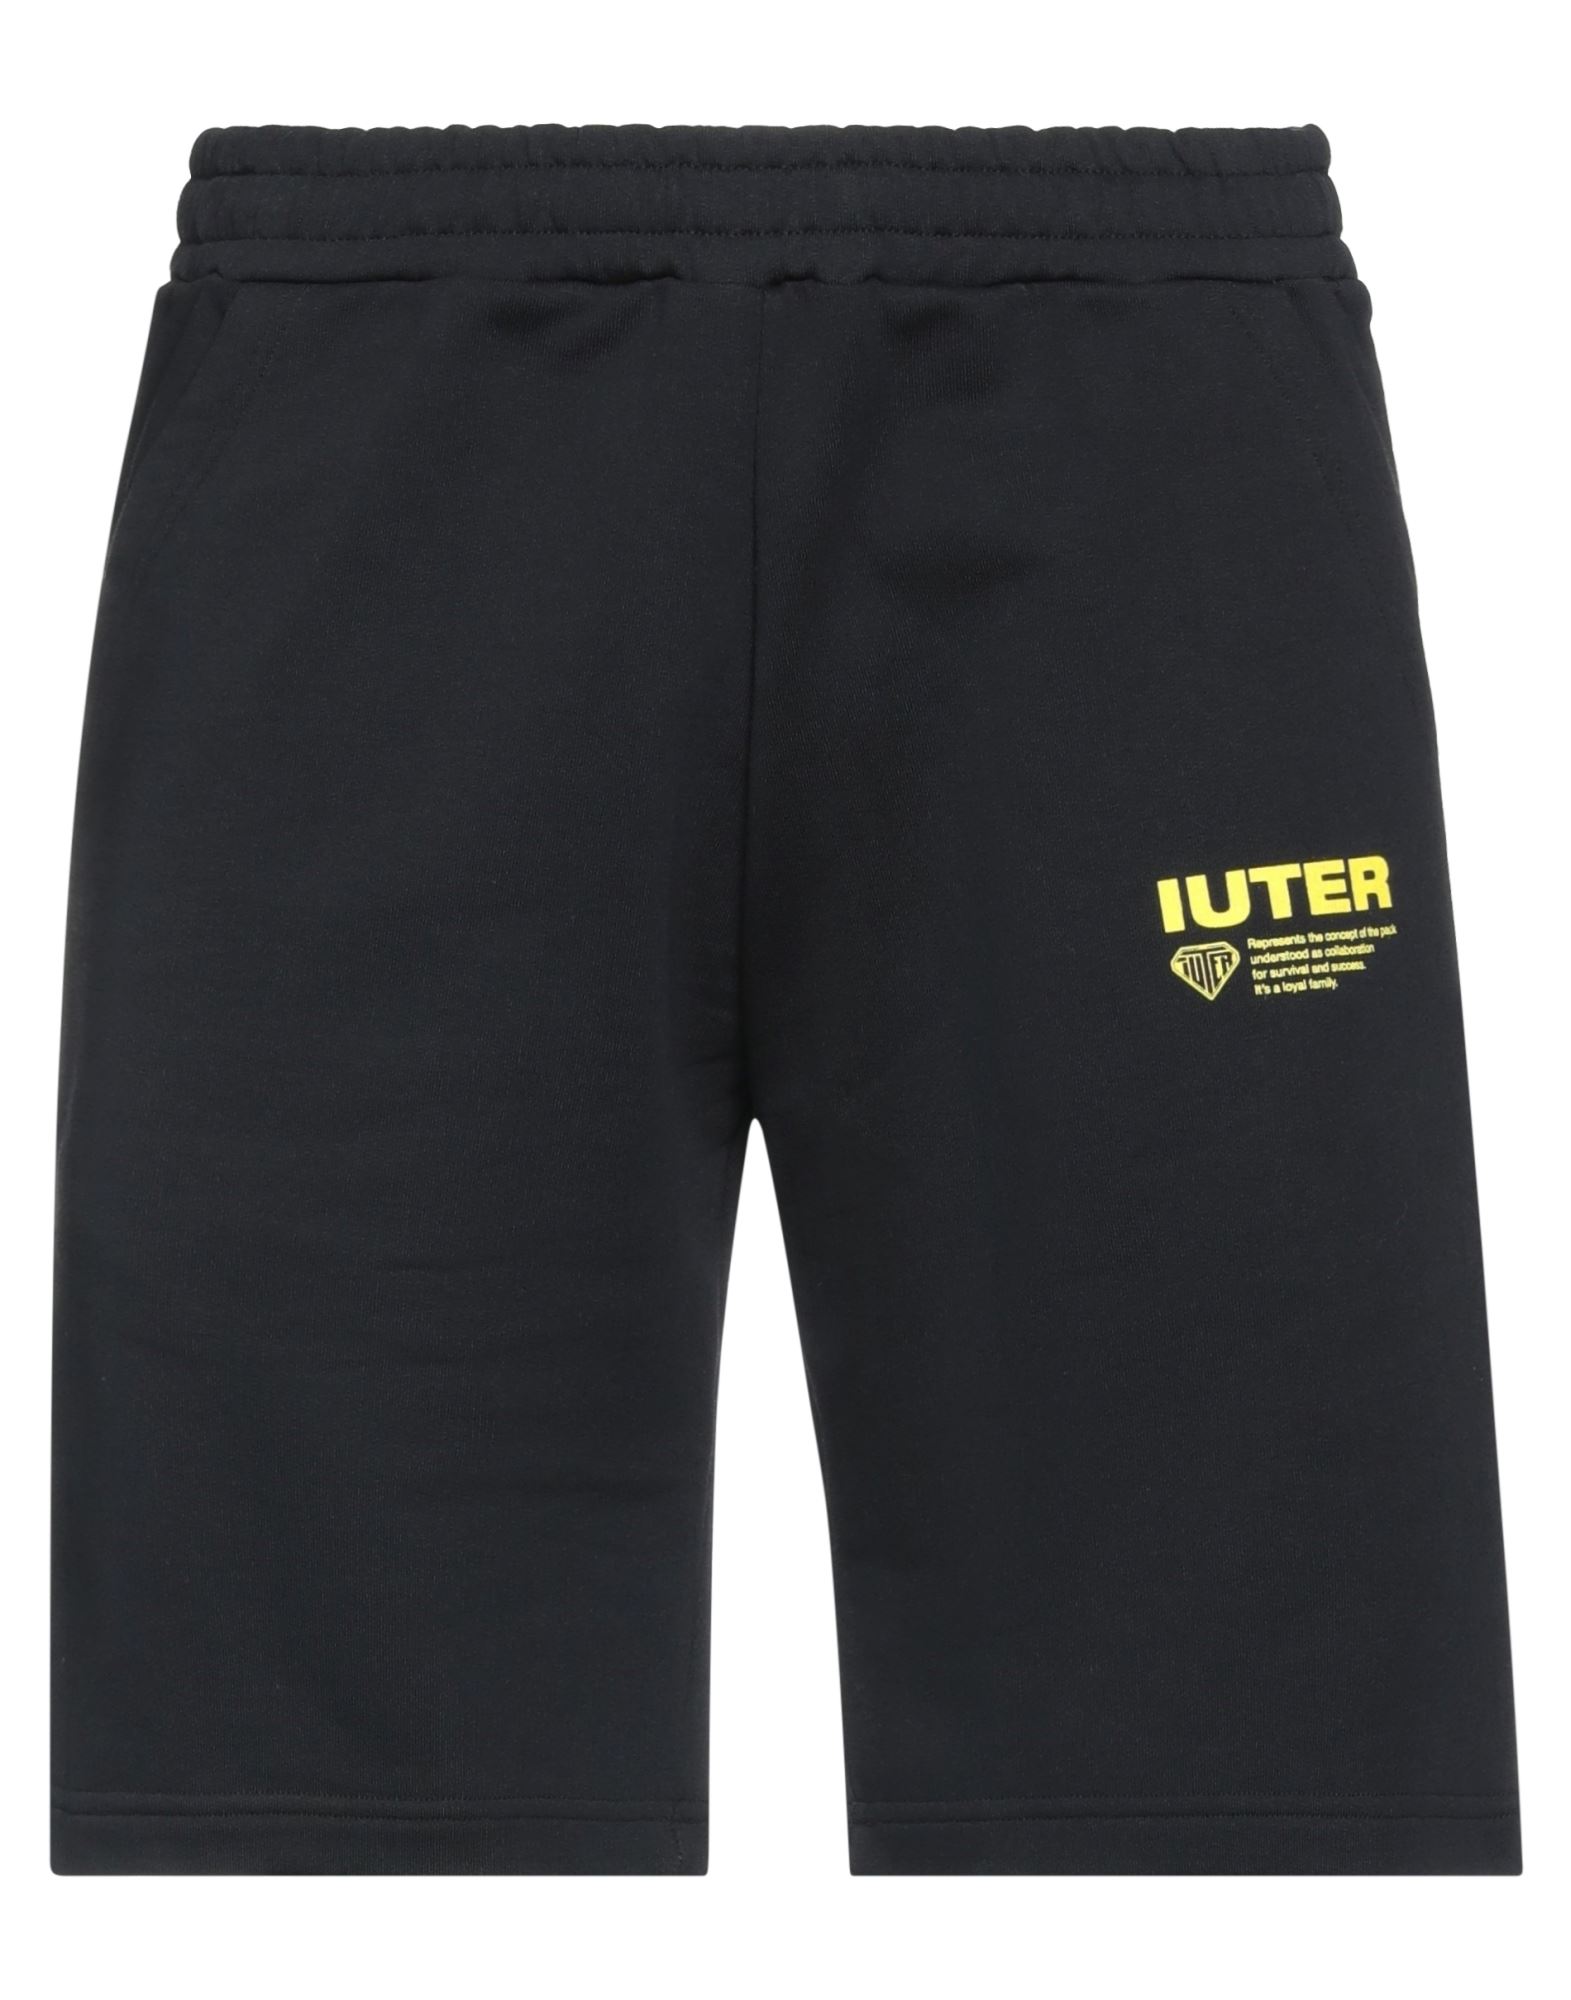 IUTER Shorts & Bermudashorts Herren Schwarz von IUTER